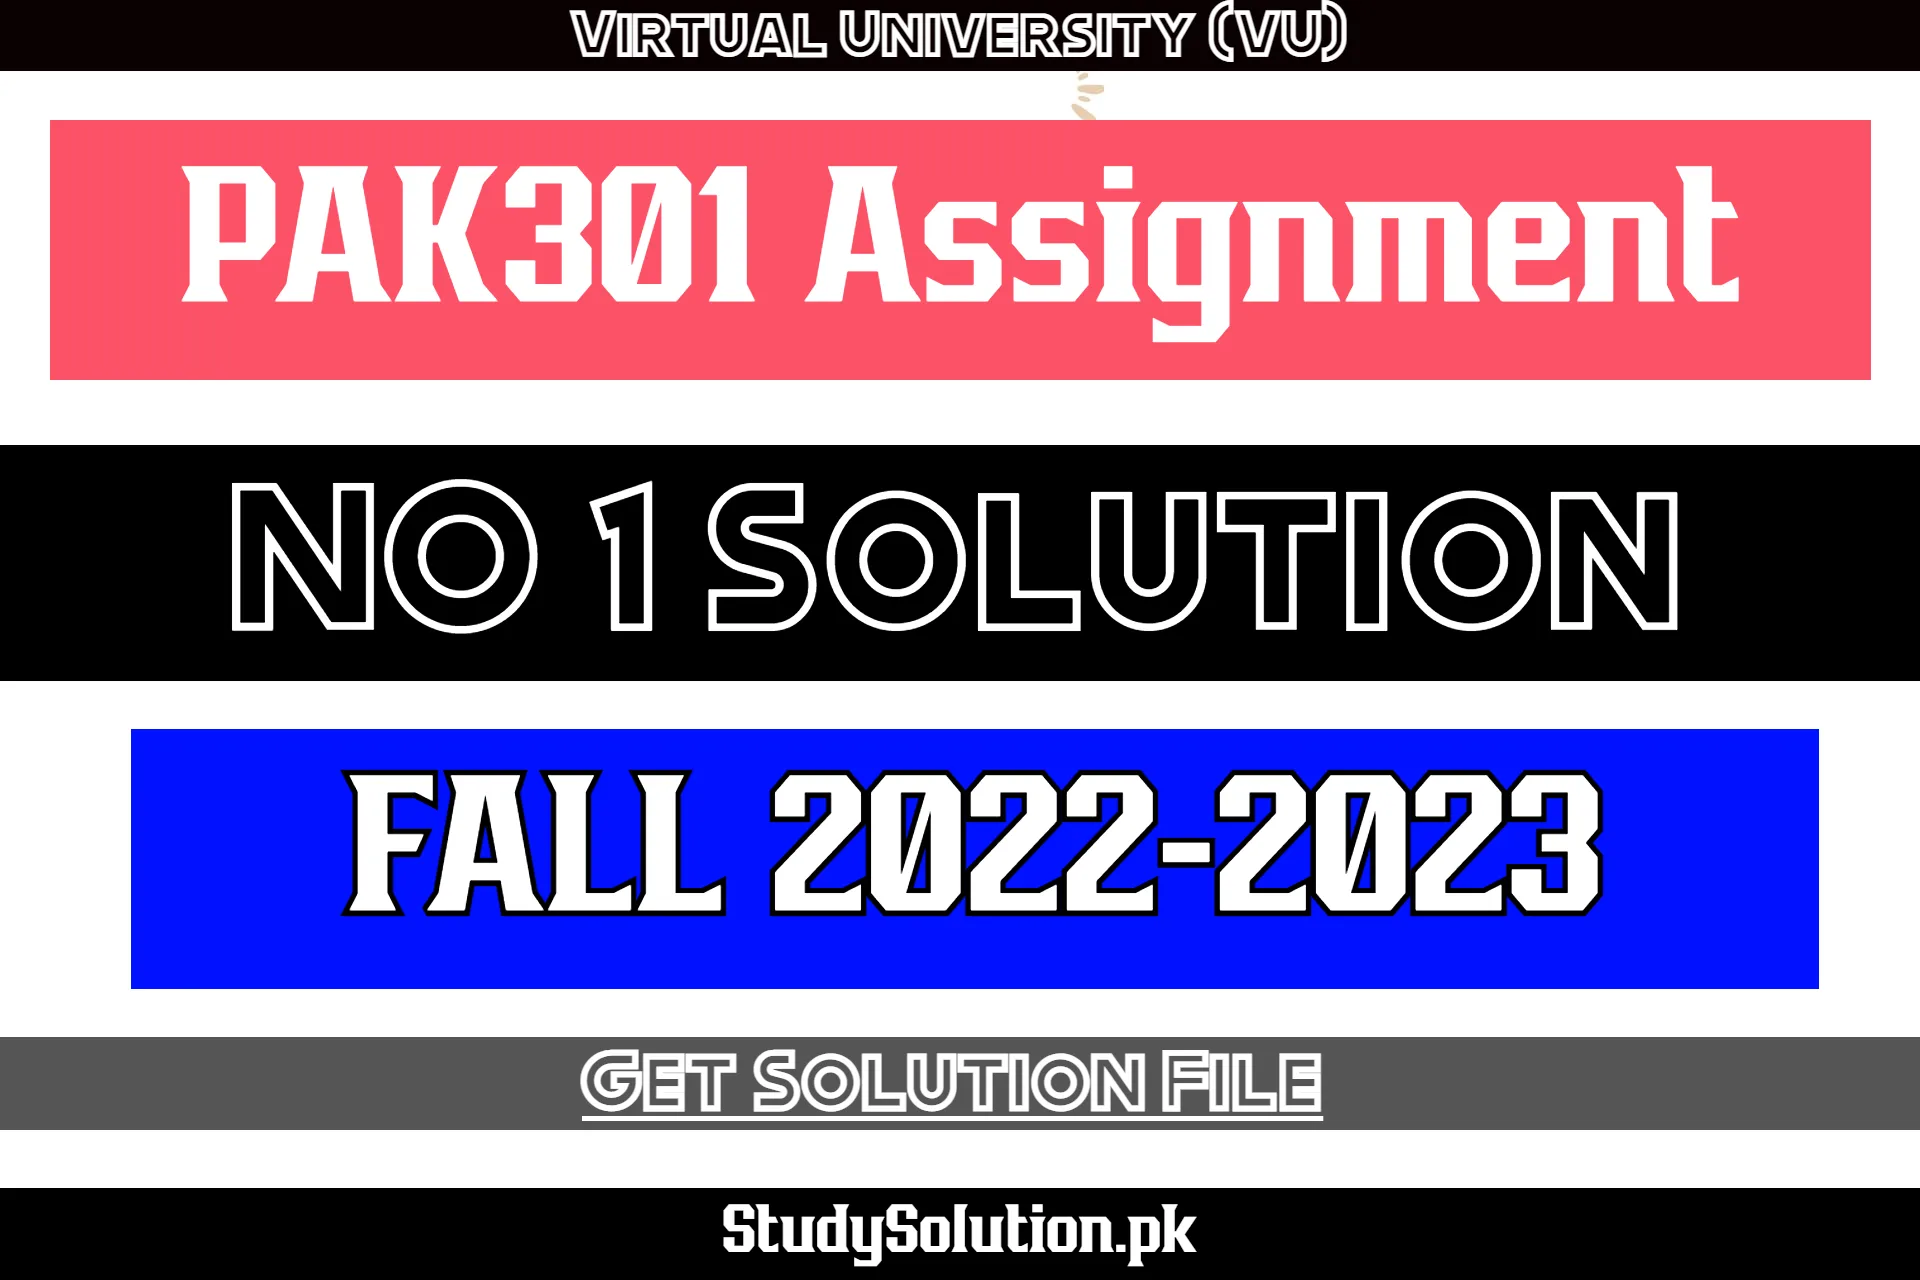 PAK301 Assignment No 1 Solution Fall 2022